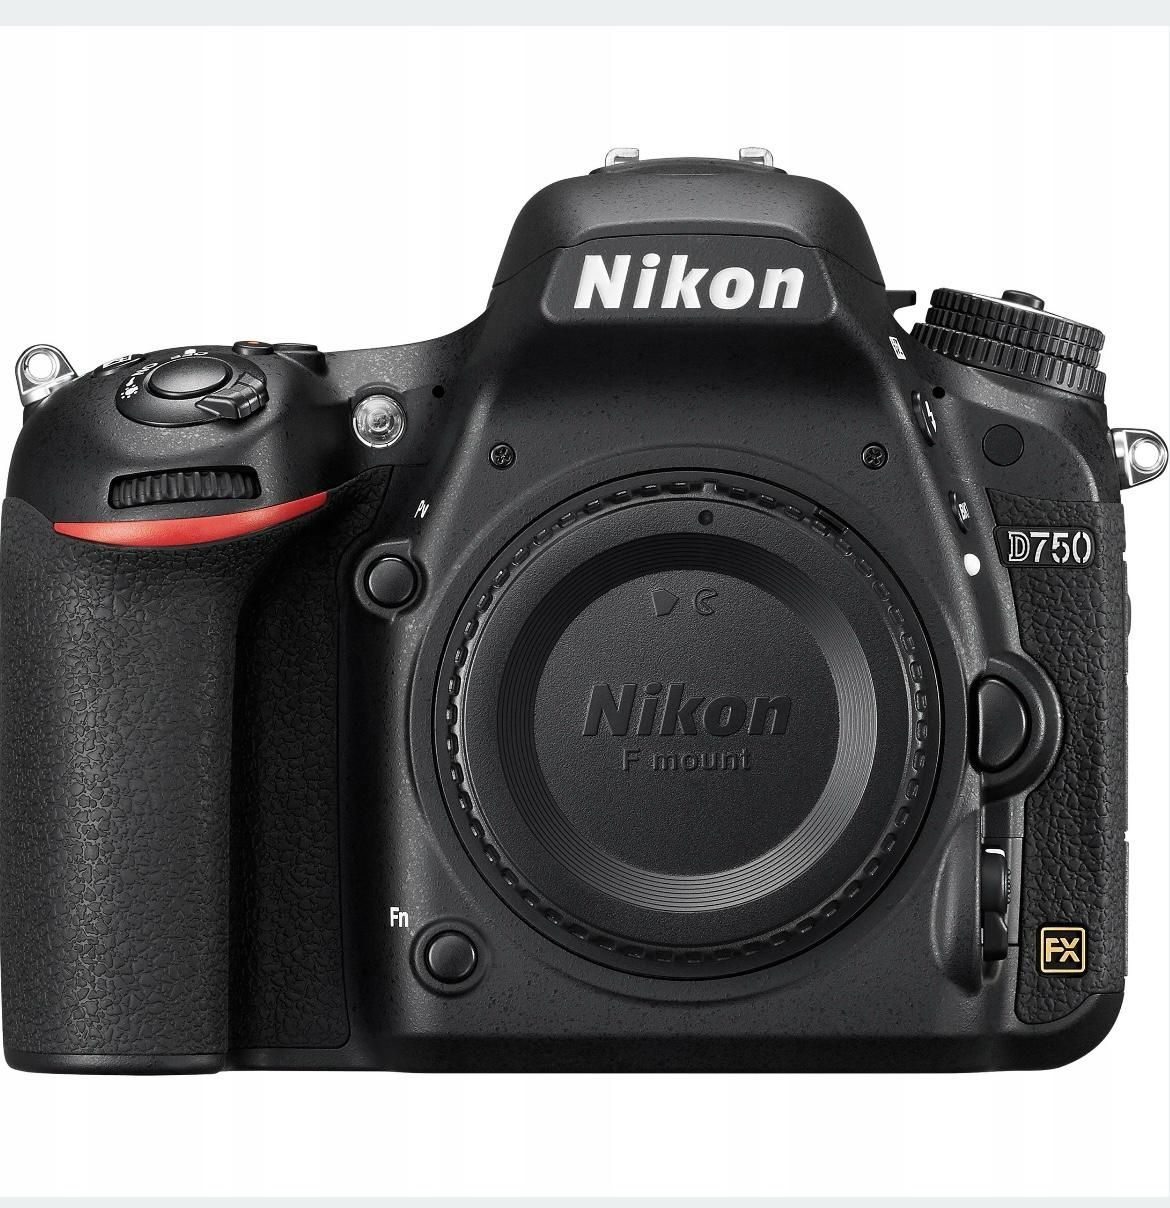 Aparat Nikon D 750 obiektyw Nikkor 50 mm 1.4